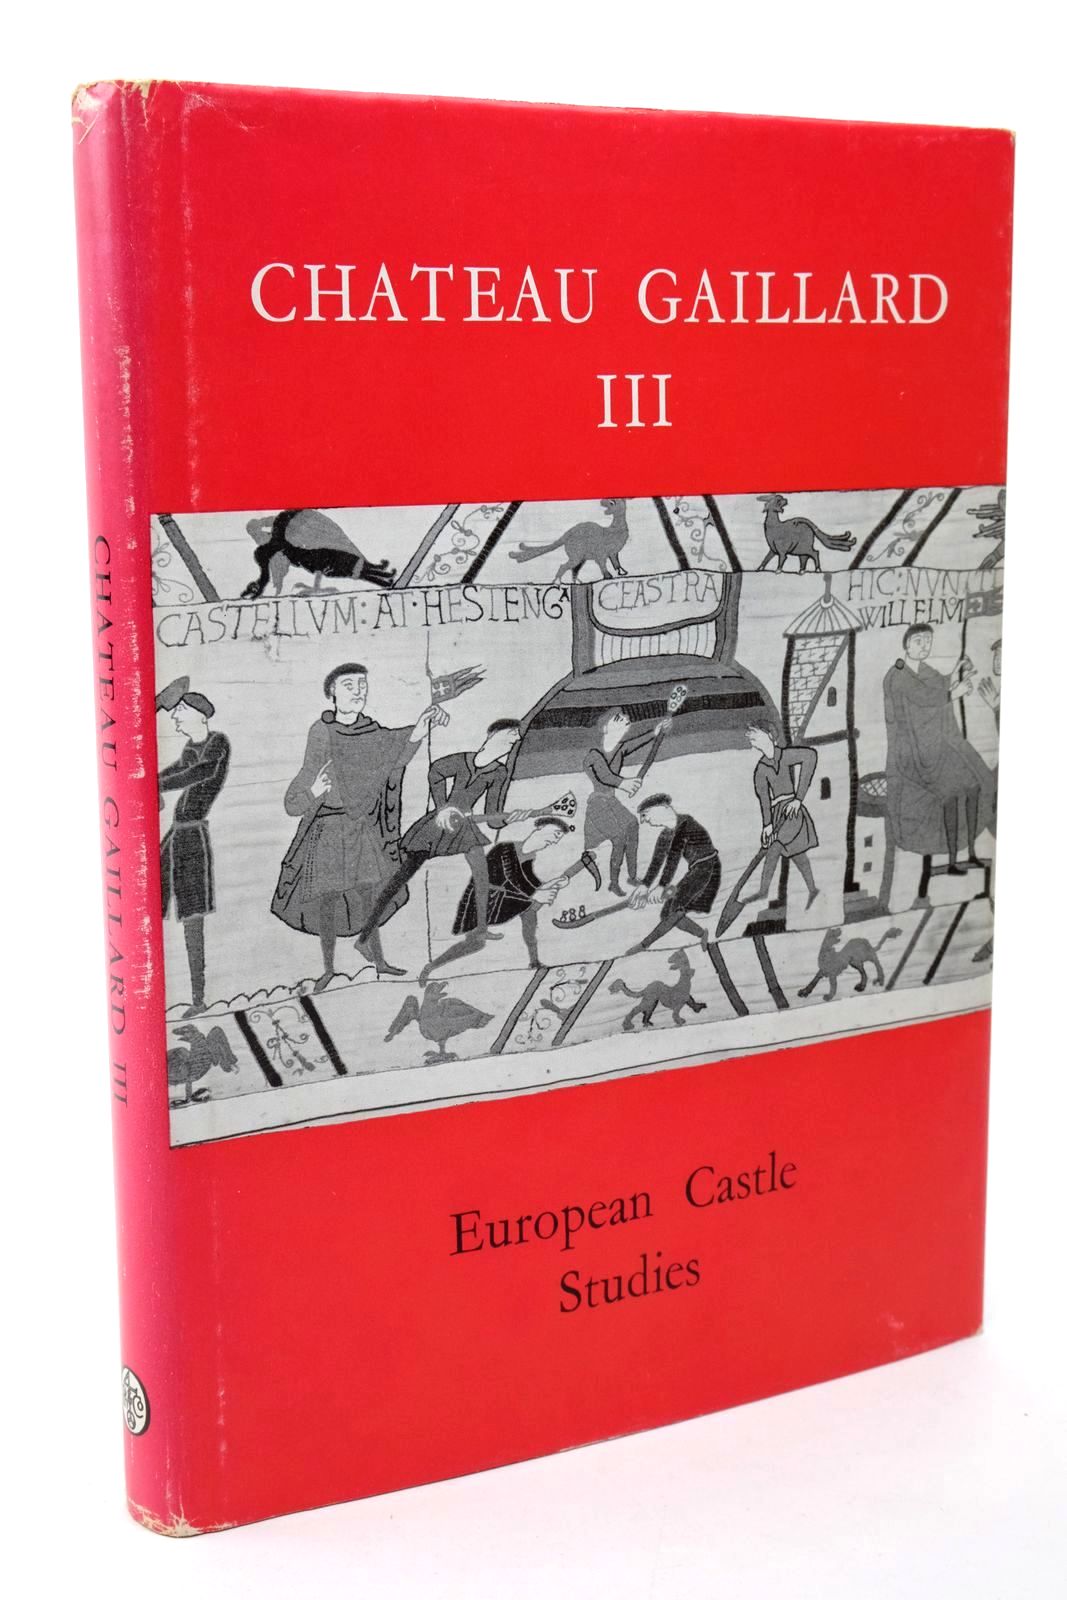 Photo of CHATEAU GAILLARD III - EUROPEAN CASTLE STUDIES- Stock Number: 1322586